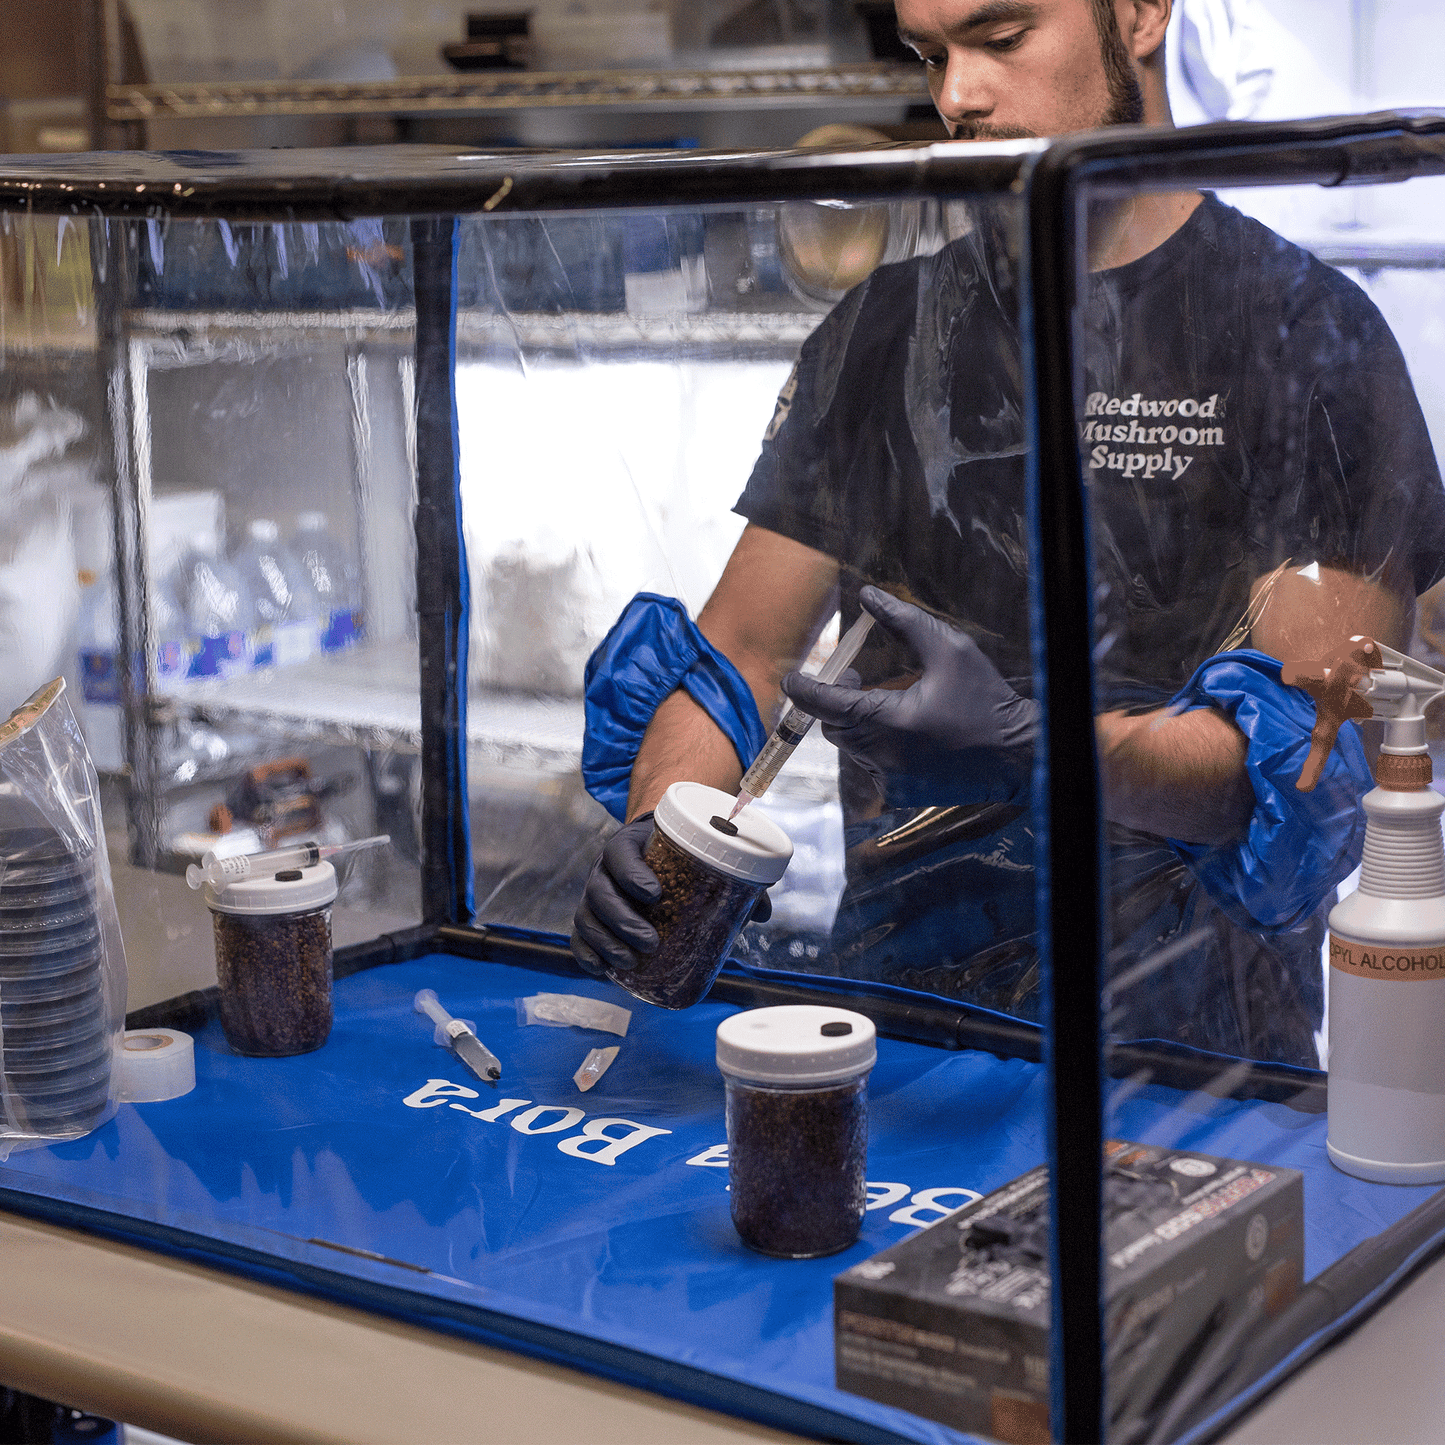 Person in a Redwood Mushroom Supply t-shirt using a syringe on grain jars inside the Bella Bora Still Air Box, illustrating the process of inoculation.